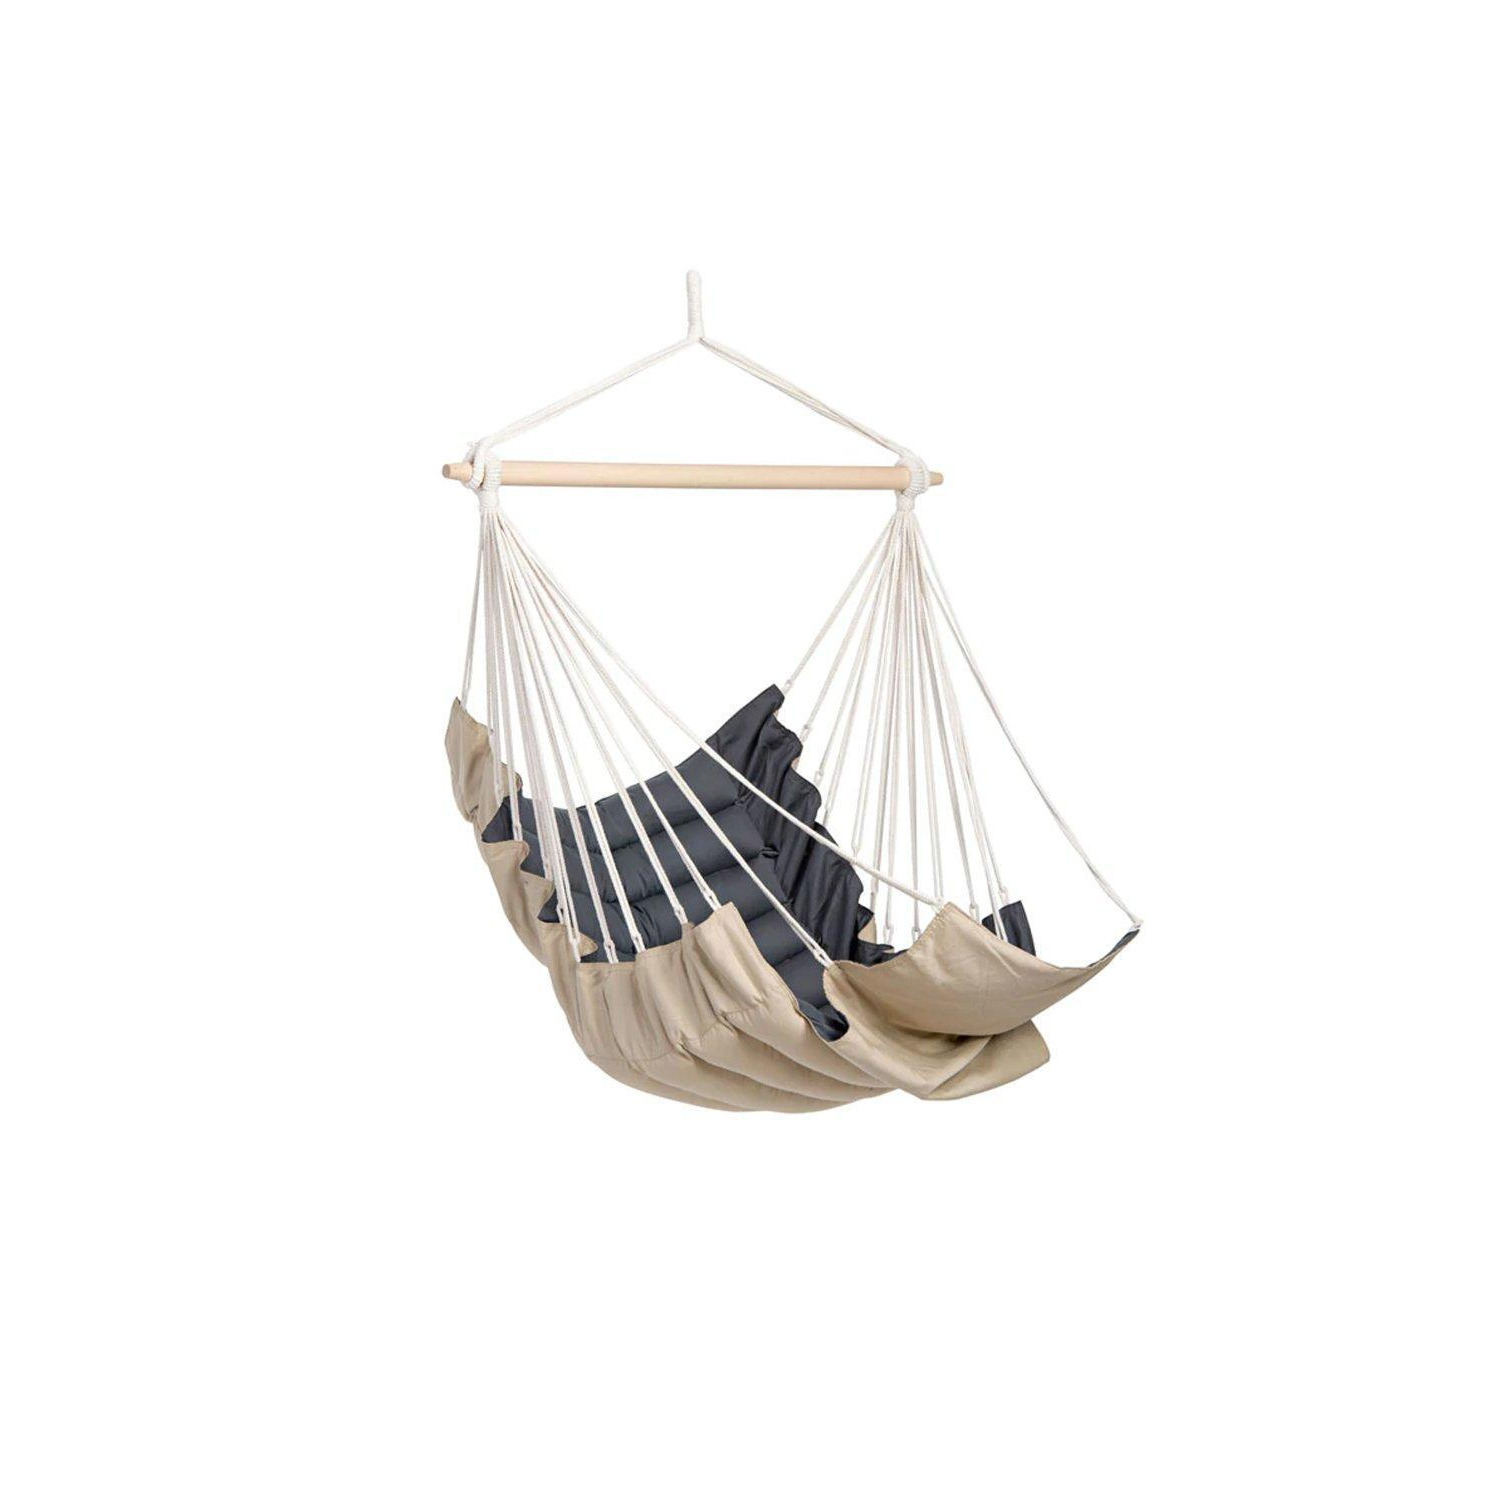 Amazonas California Hanging Hammock Chair - Sand - image 1